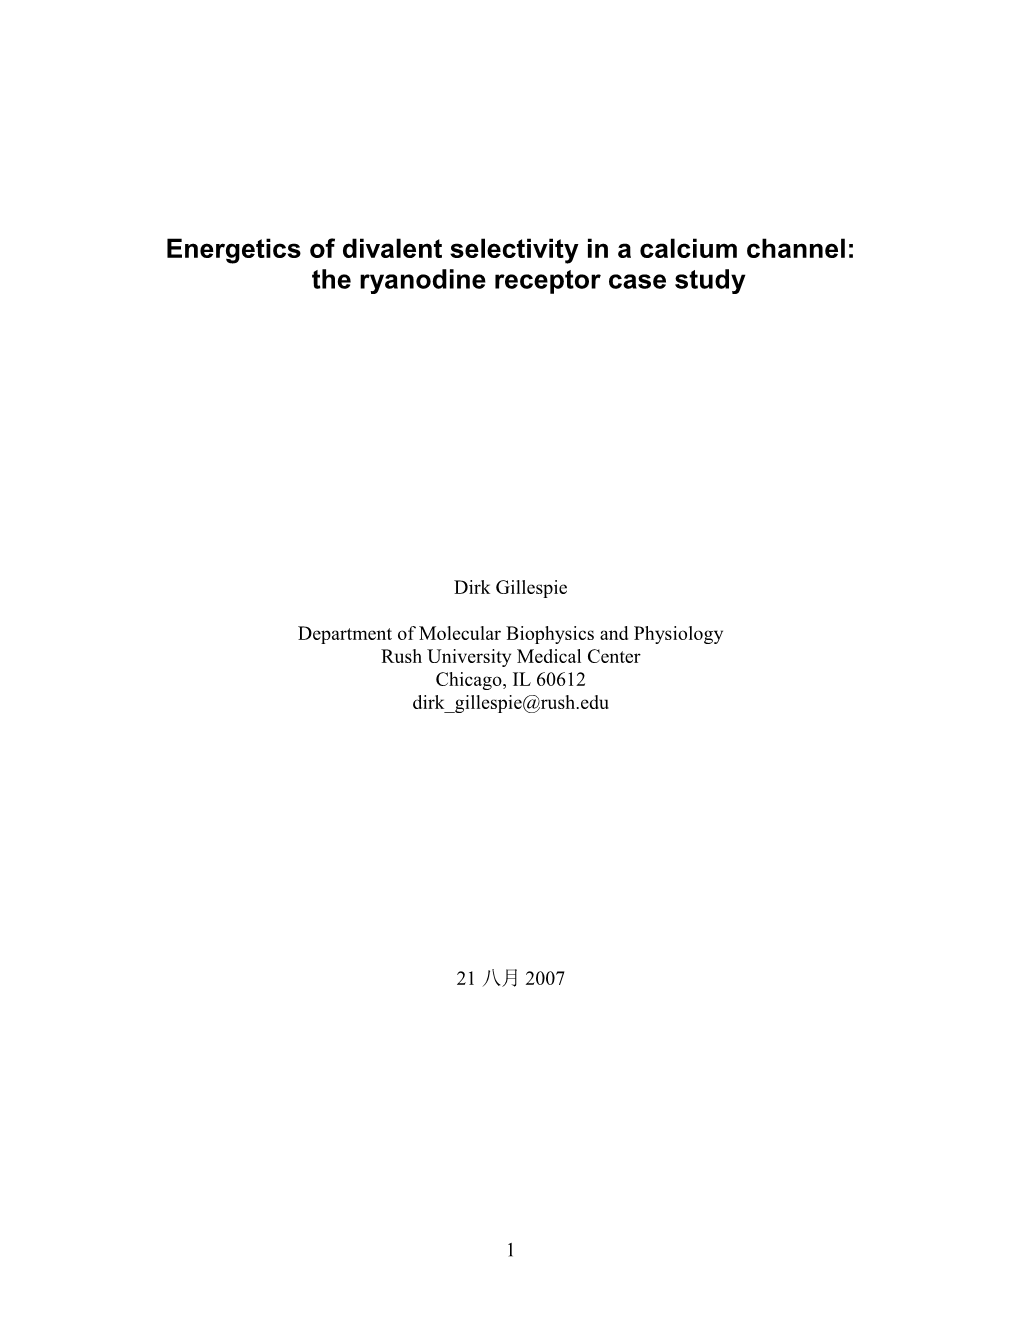 Energetics of Calcium Selectivity in a Calcium Channel: the Ryanodine Receptor Case Study